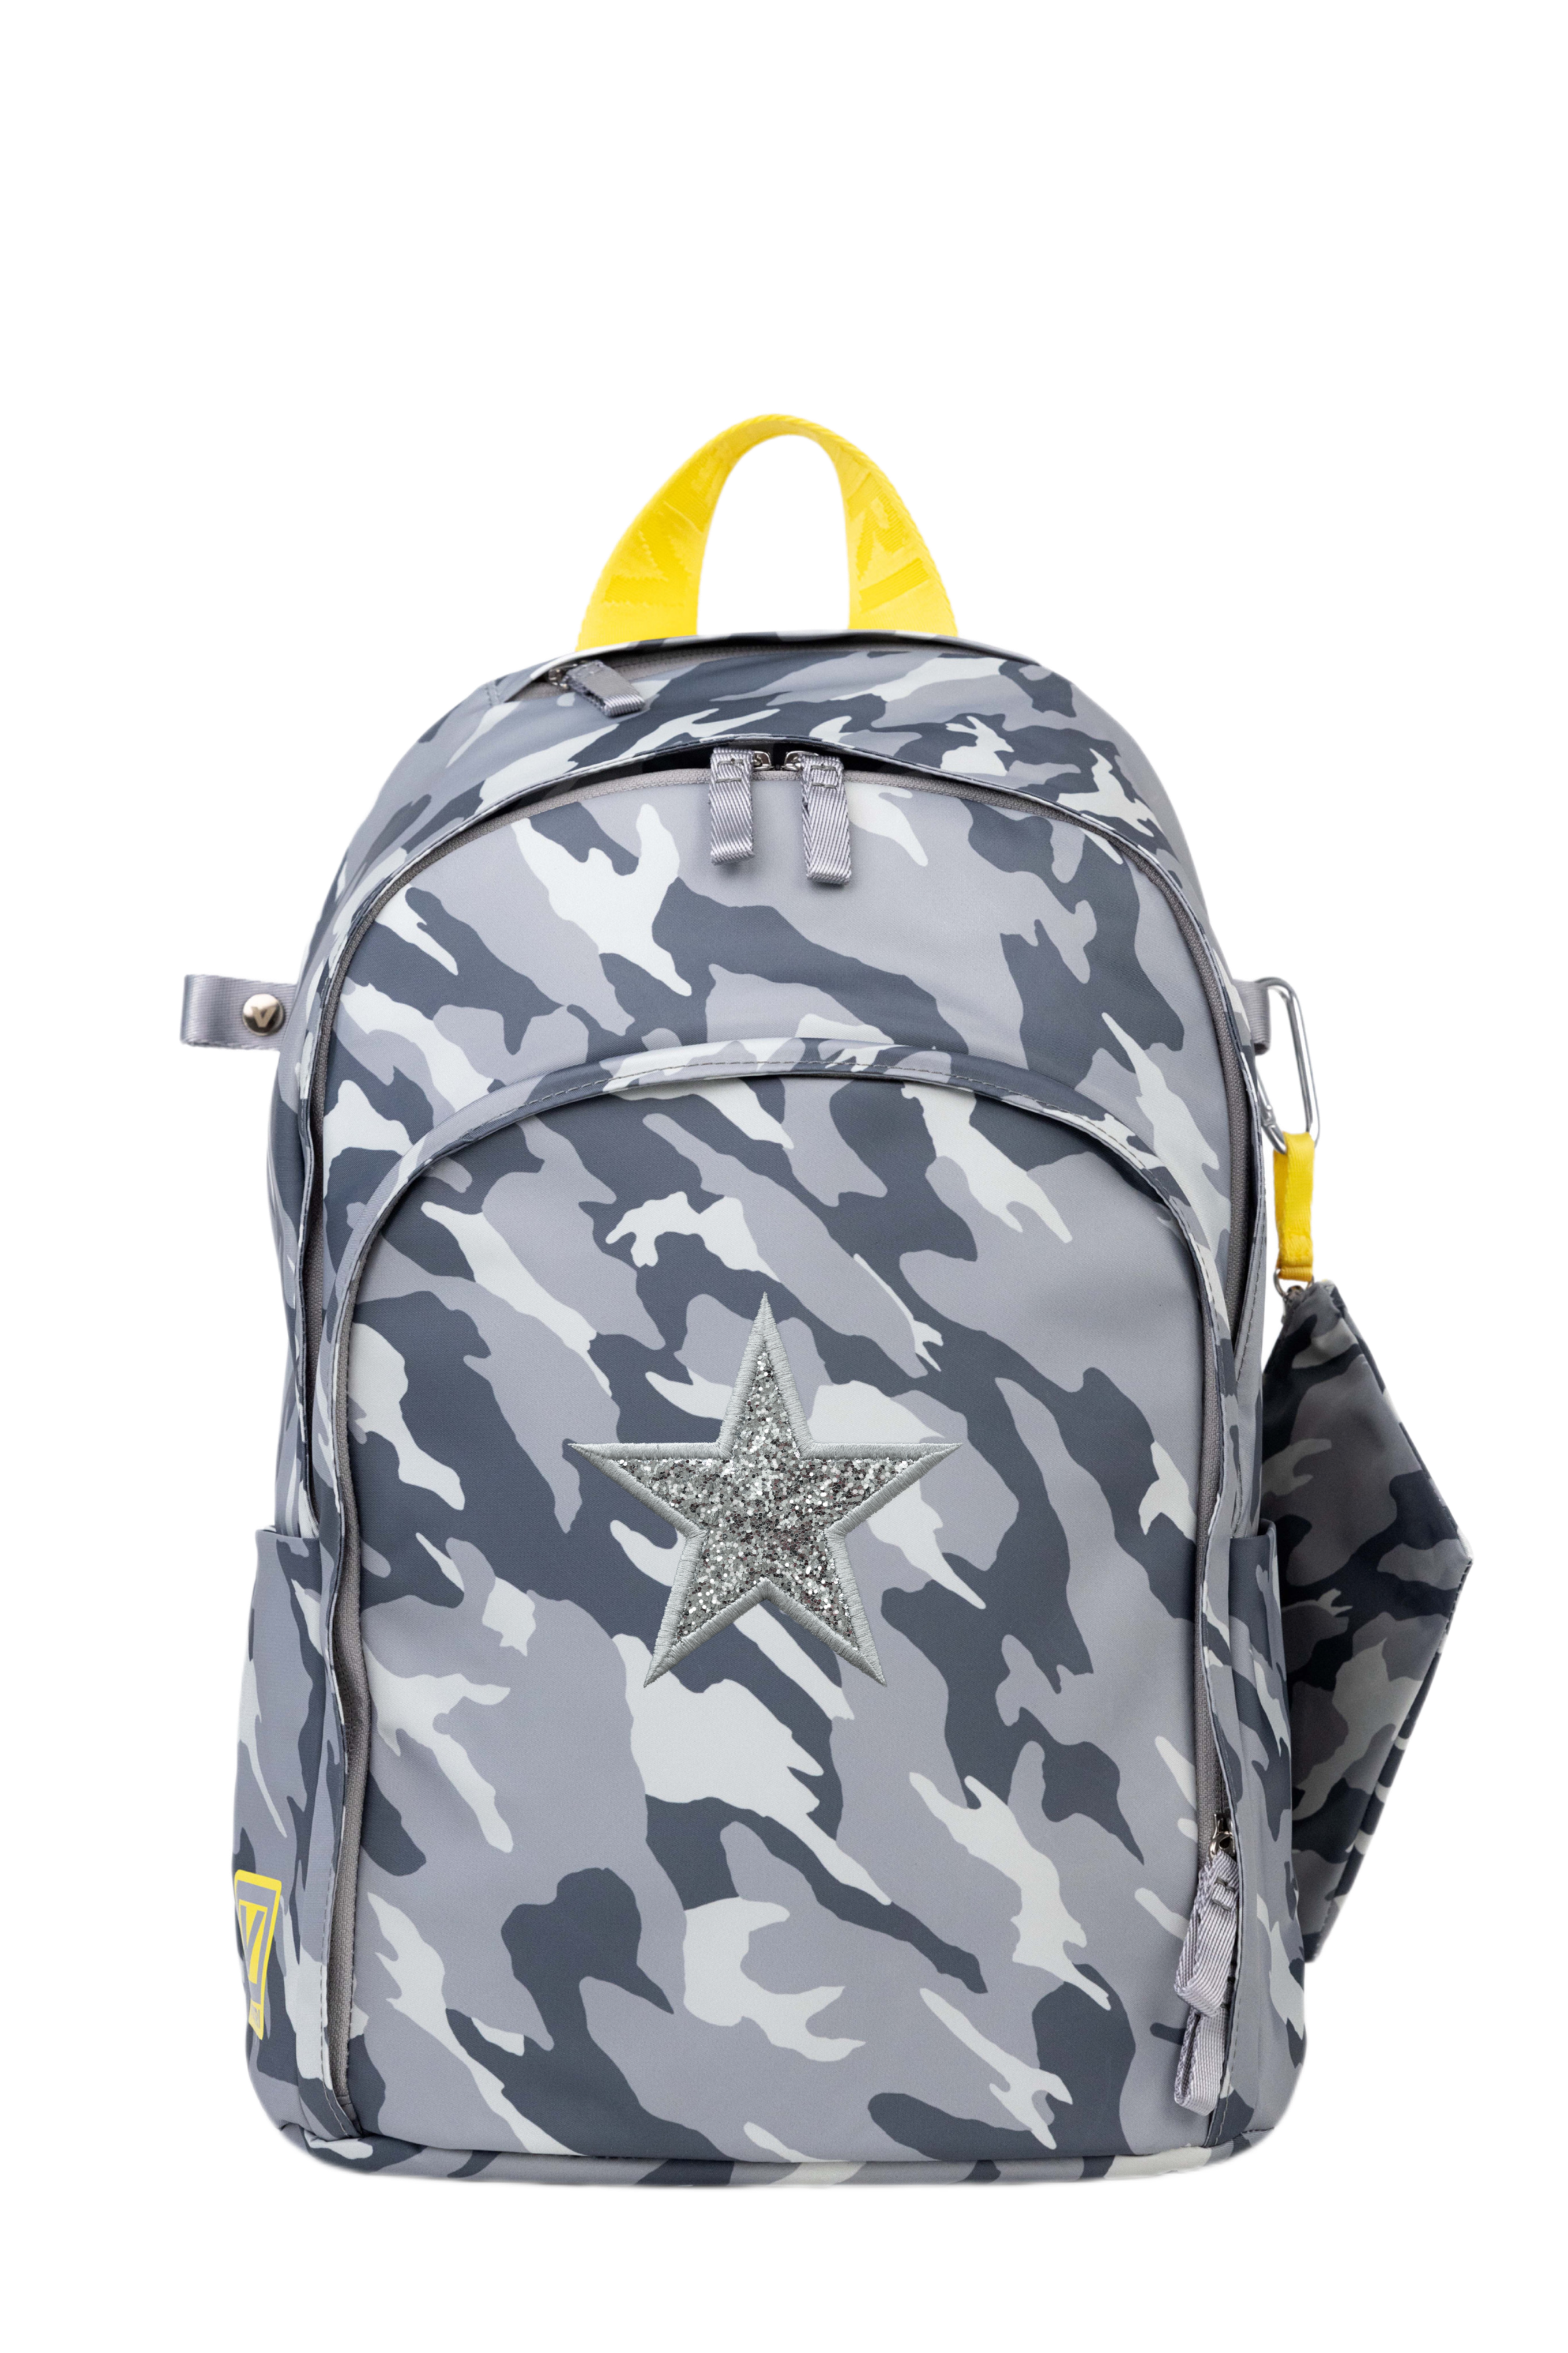 Novelty Backpack "Star"